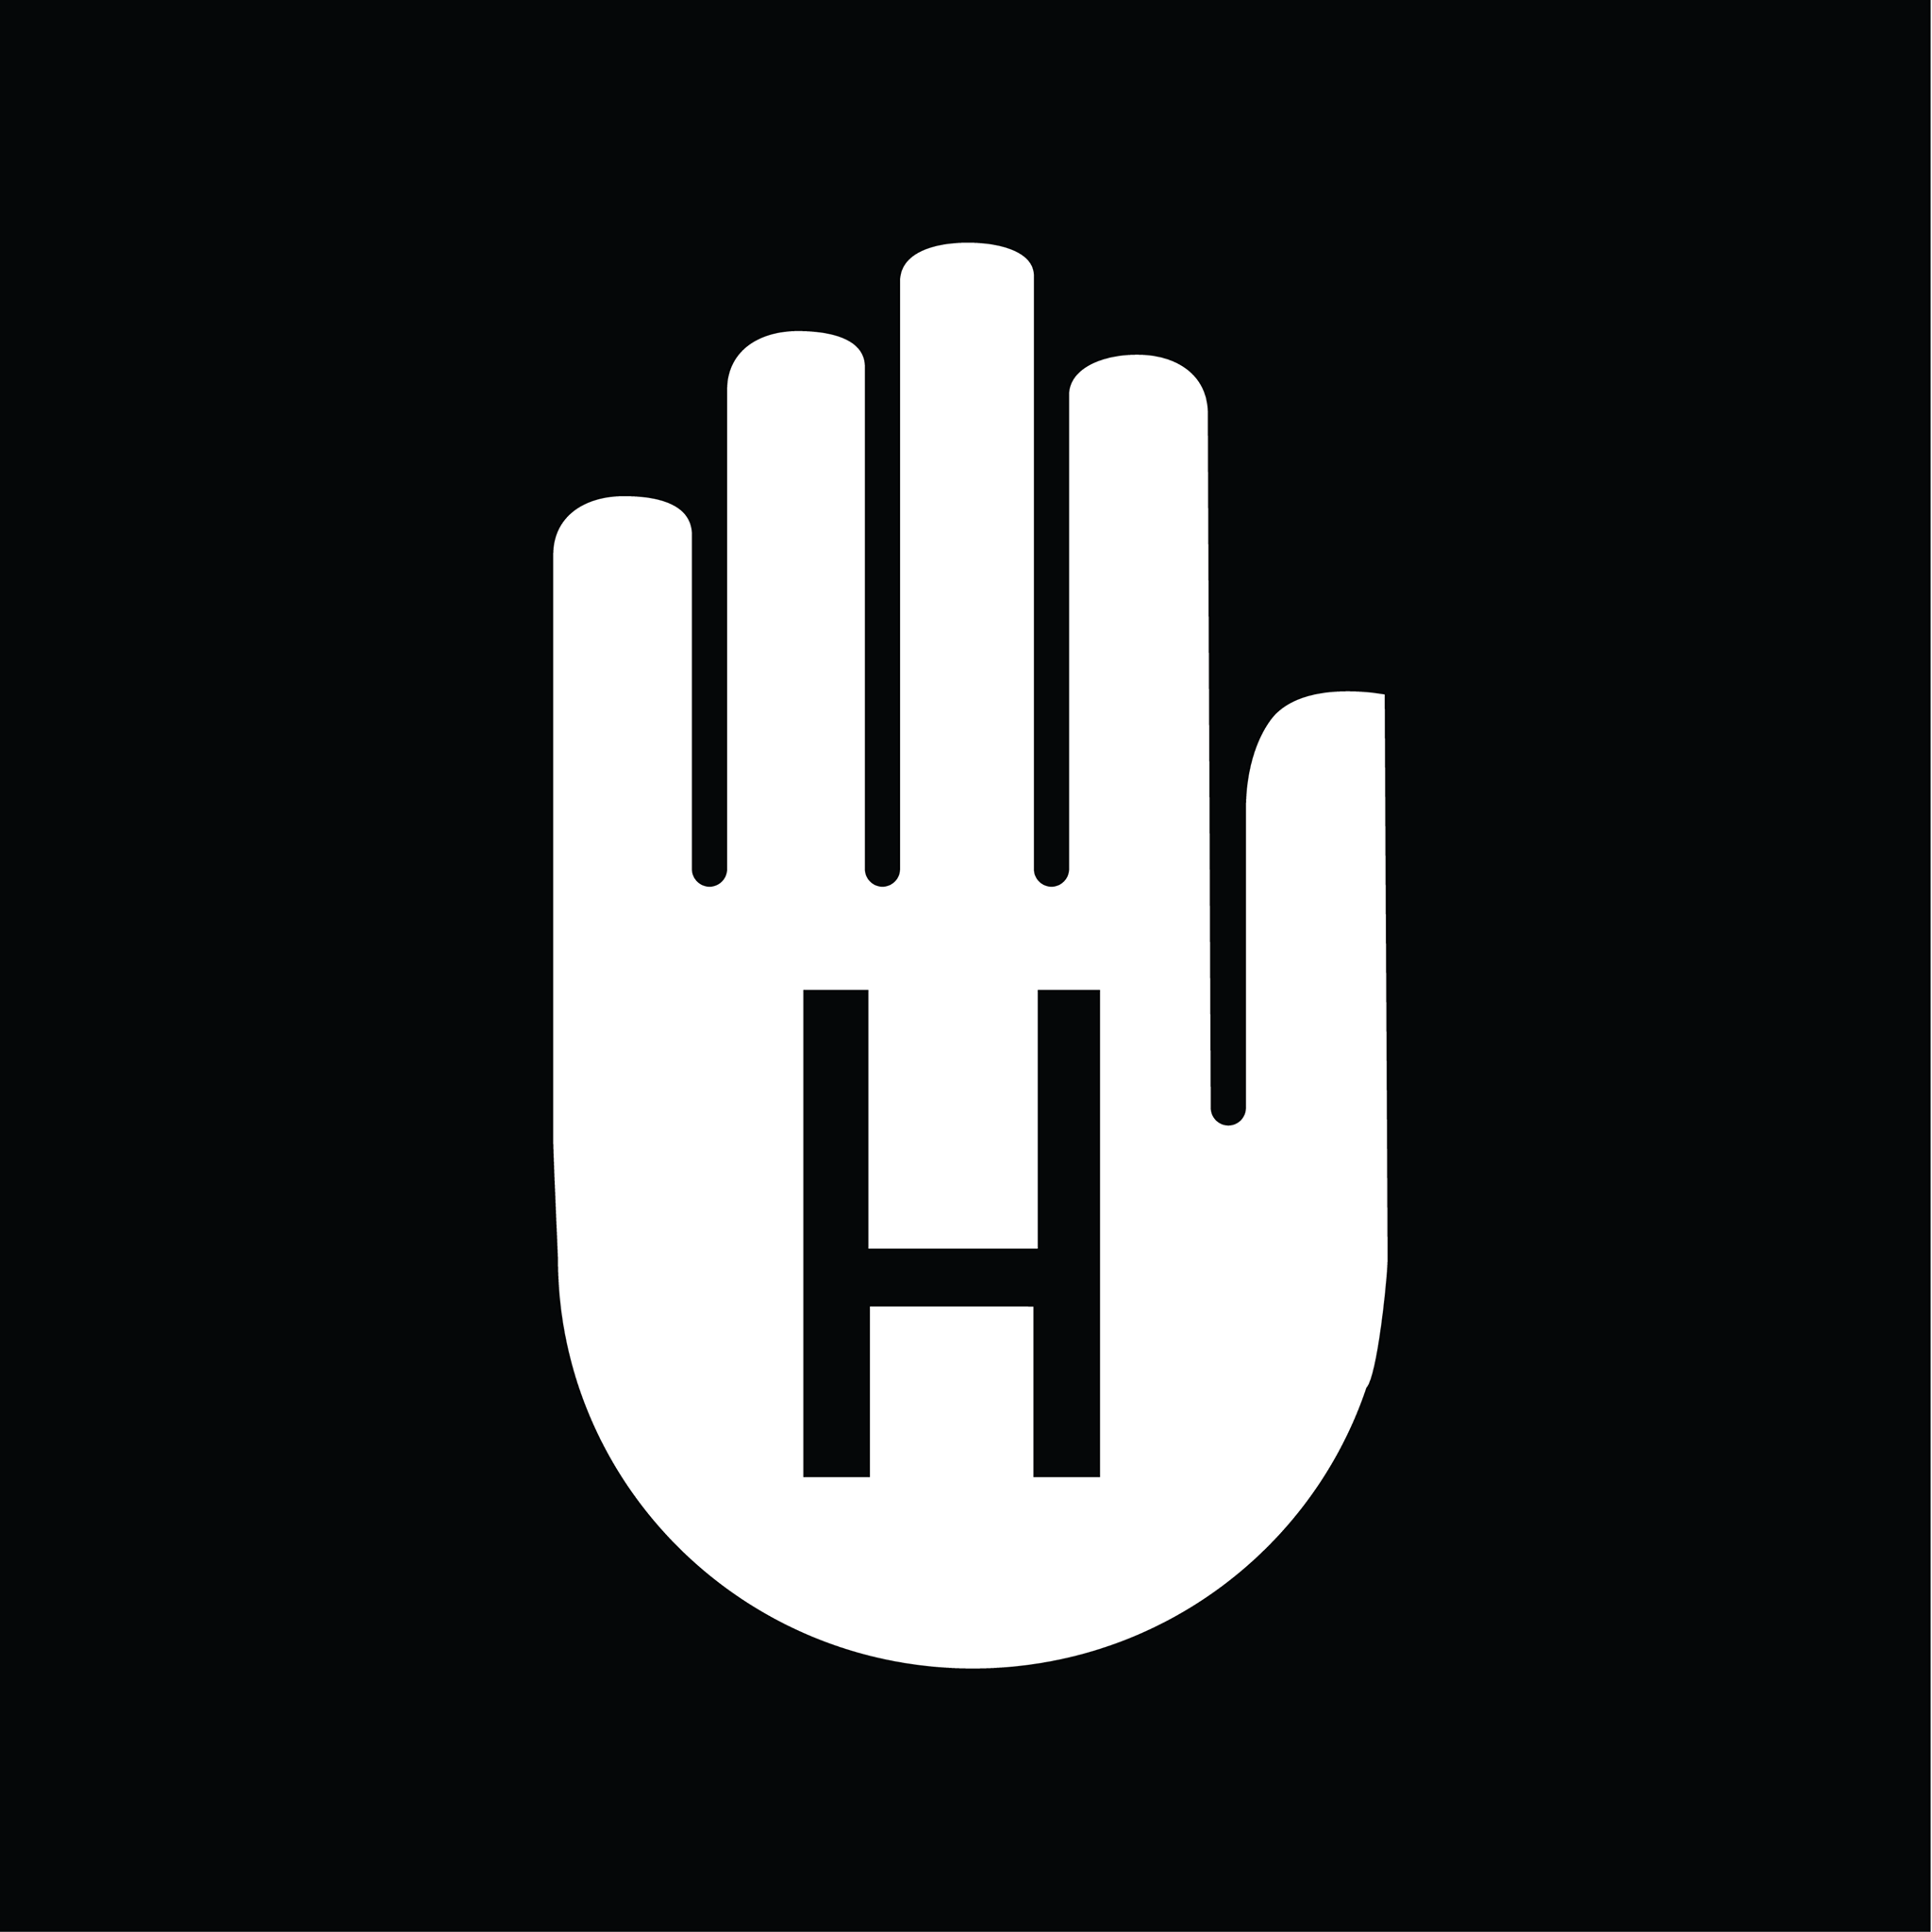 Company logo of Look Human